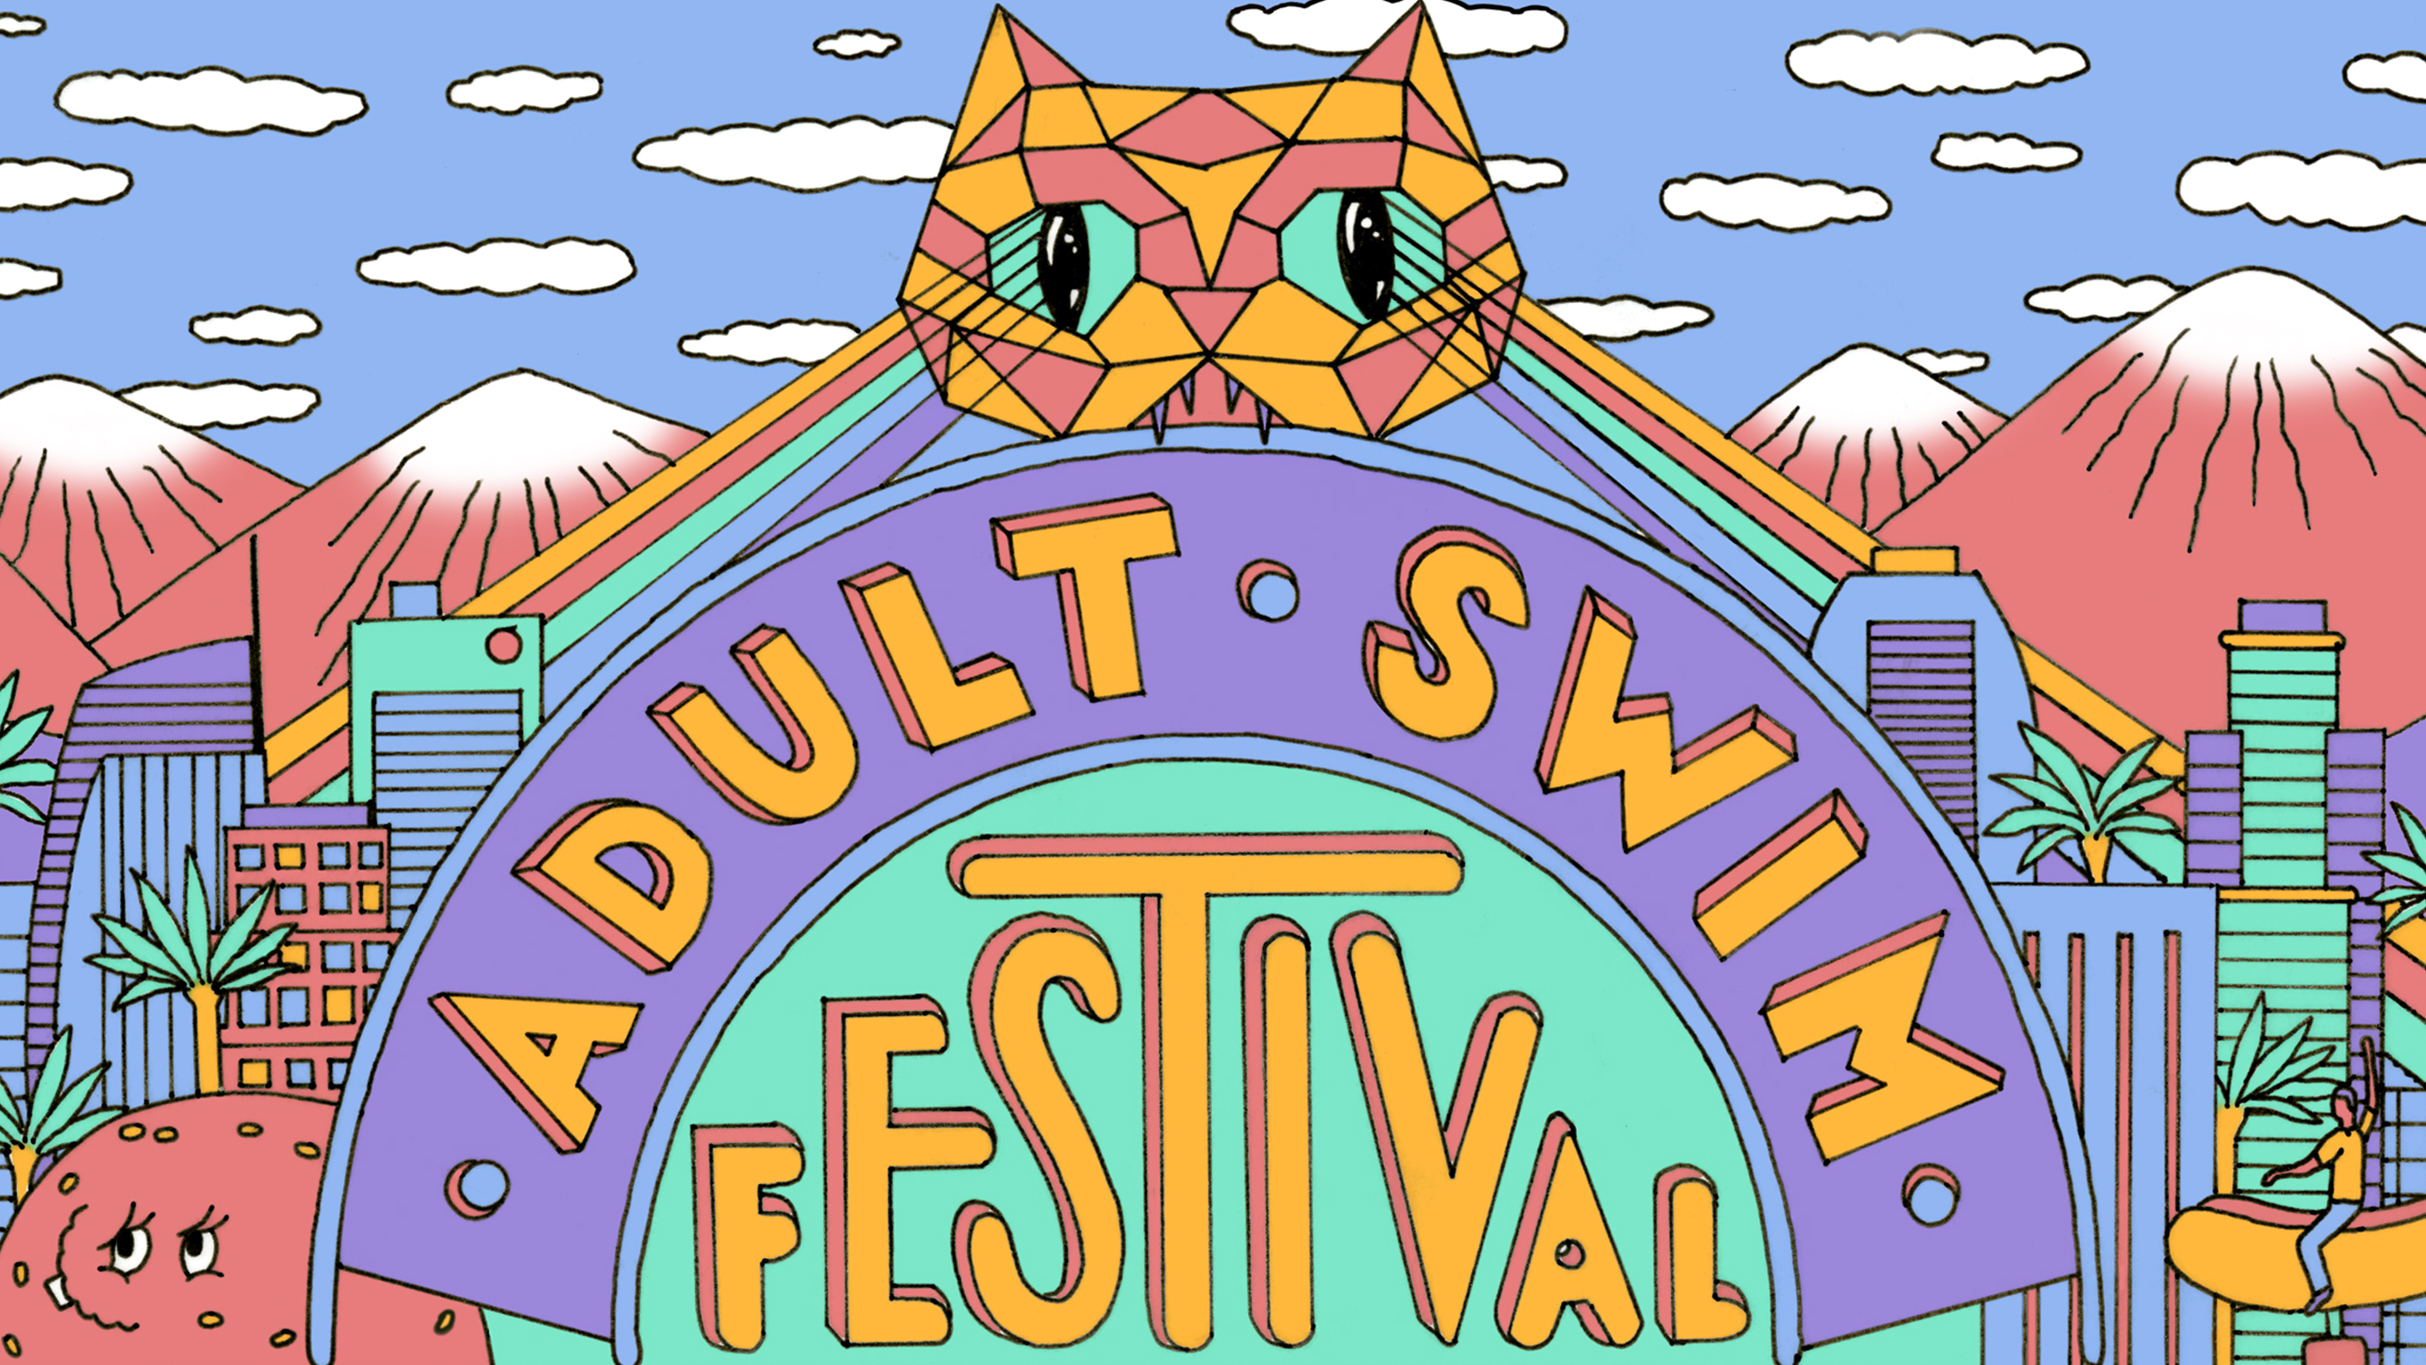 Adult Swim Festival anuncia su cartelera, y anuncia una ‘Ricksperience Musical de Rick & Morty”. Cusica Plus.